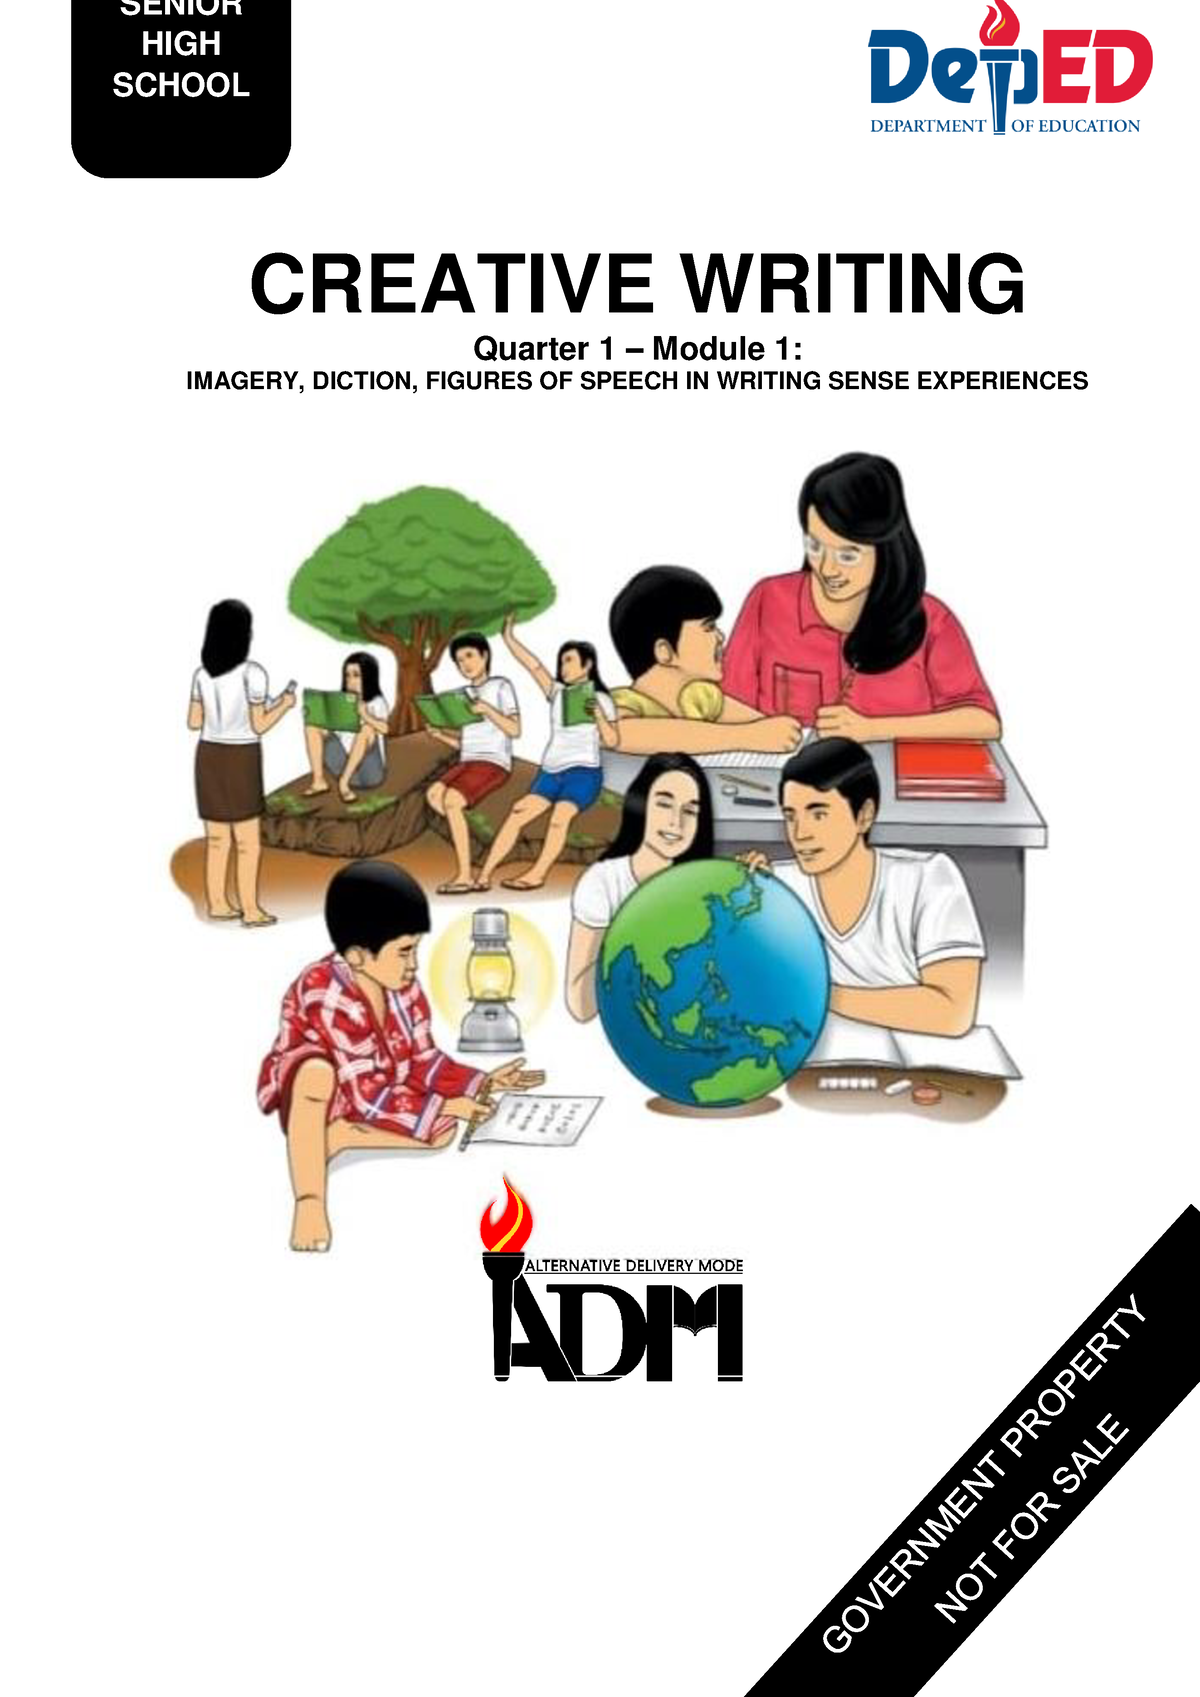 creative writing module 2 quarter 1